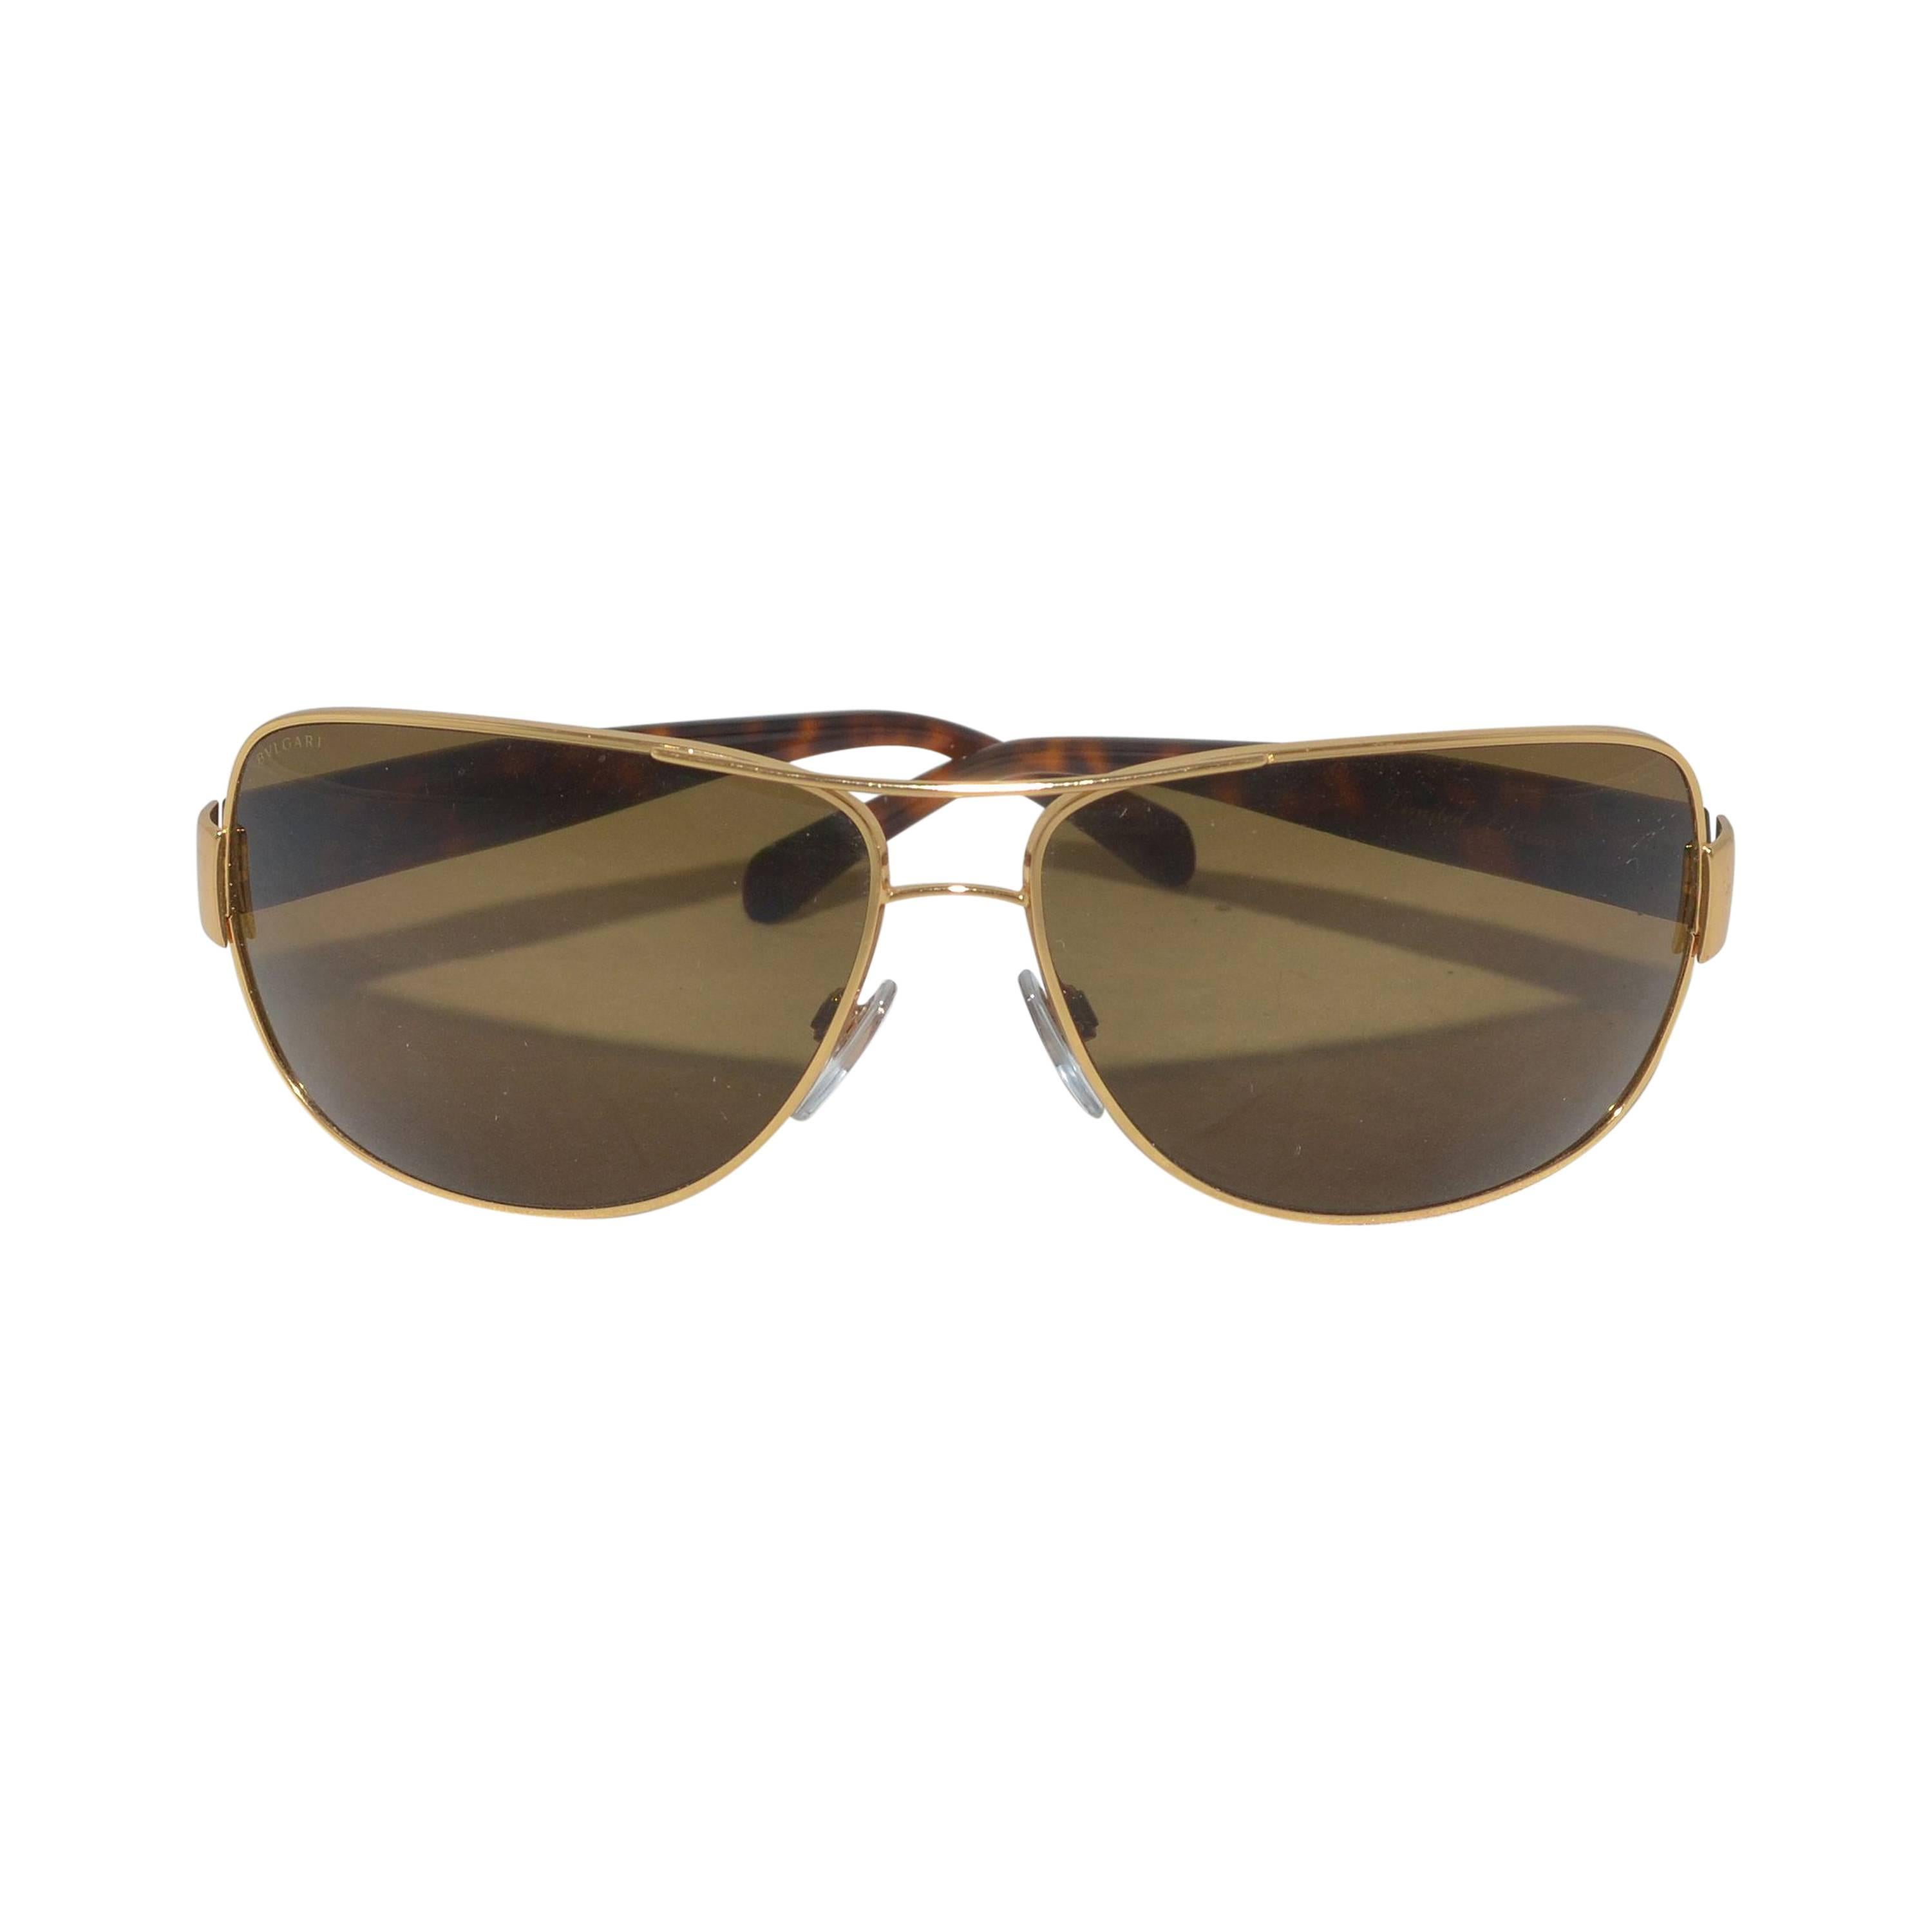 Bulgari 18k Gold Plated Polarzied Aviator Sunglasses Limited Edition